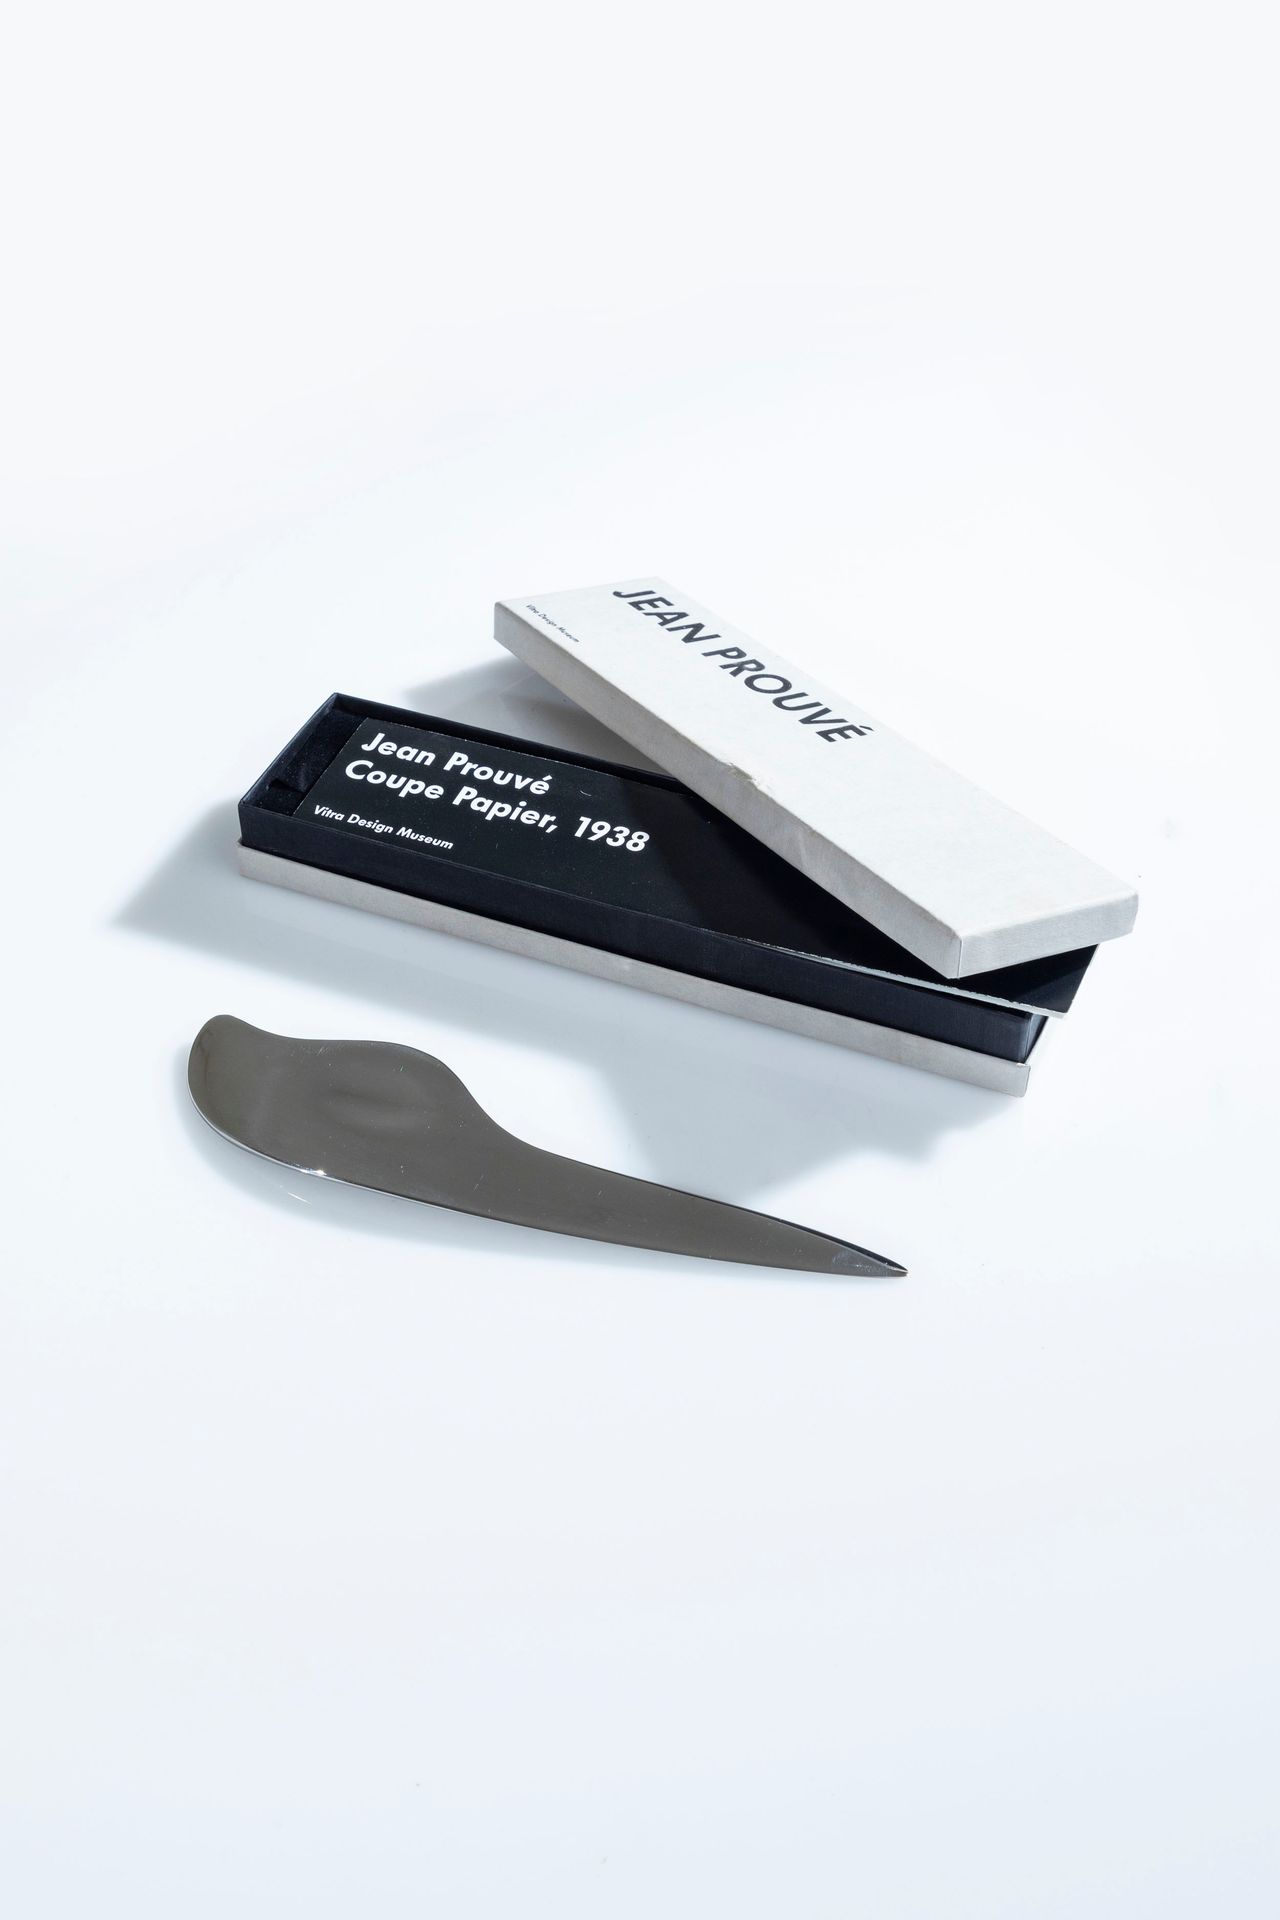 JEAN PROUVÉ Tagliacarte. Metallo. Produzione Vitra. 
Cm 0,4x21x5,5
A PAPER KNIFE&hellip;